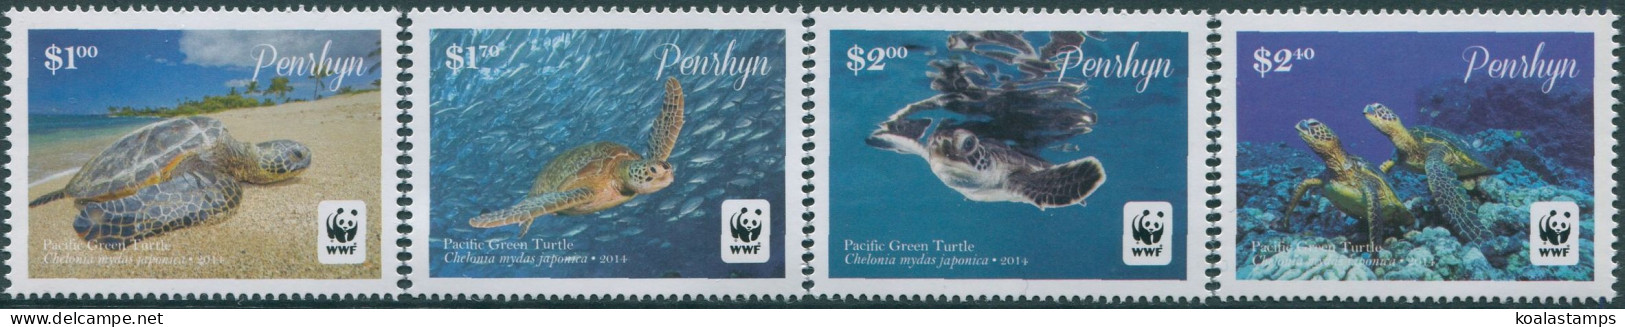 Cook Islands Penrhyn 2014 SG645-648 WWF Green Turtle White Edges Set MNH - Penrhyn